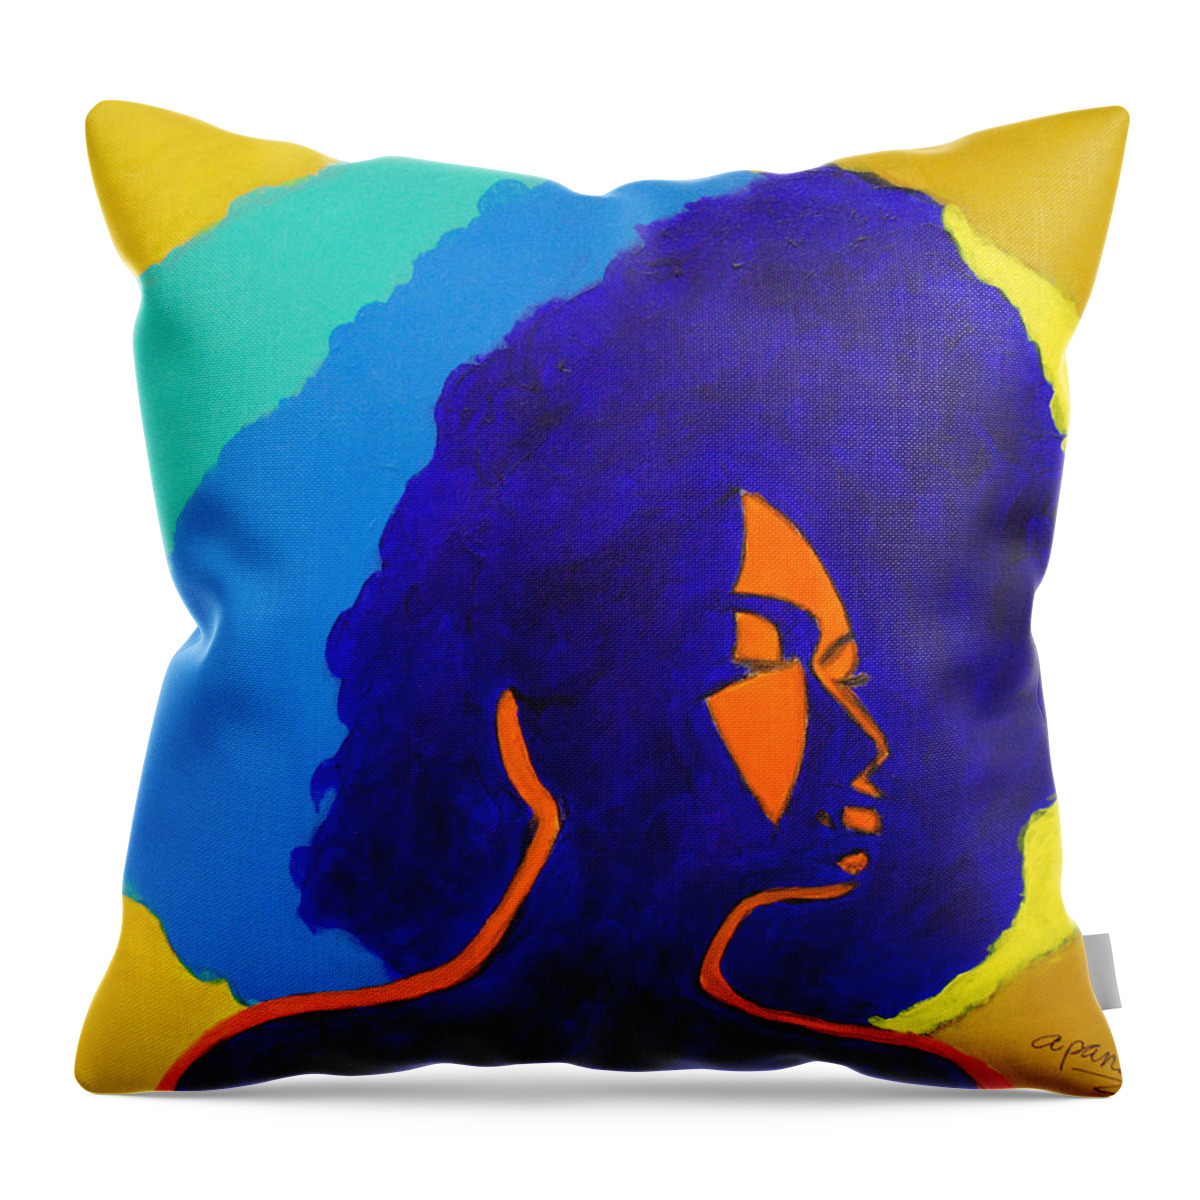 Afro Throw Pillow featuring the painting Lady Indigo by Apanaki Temitayo M